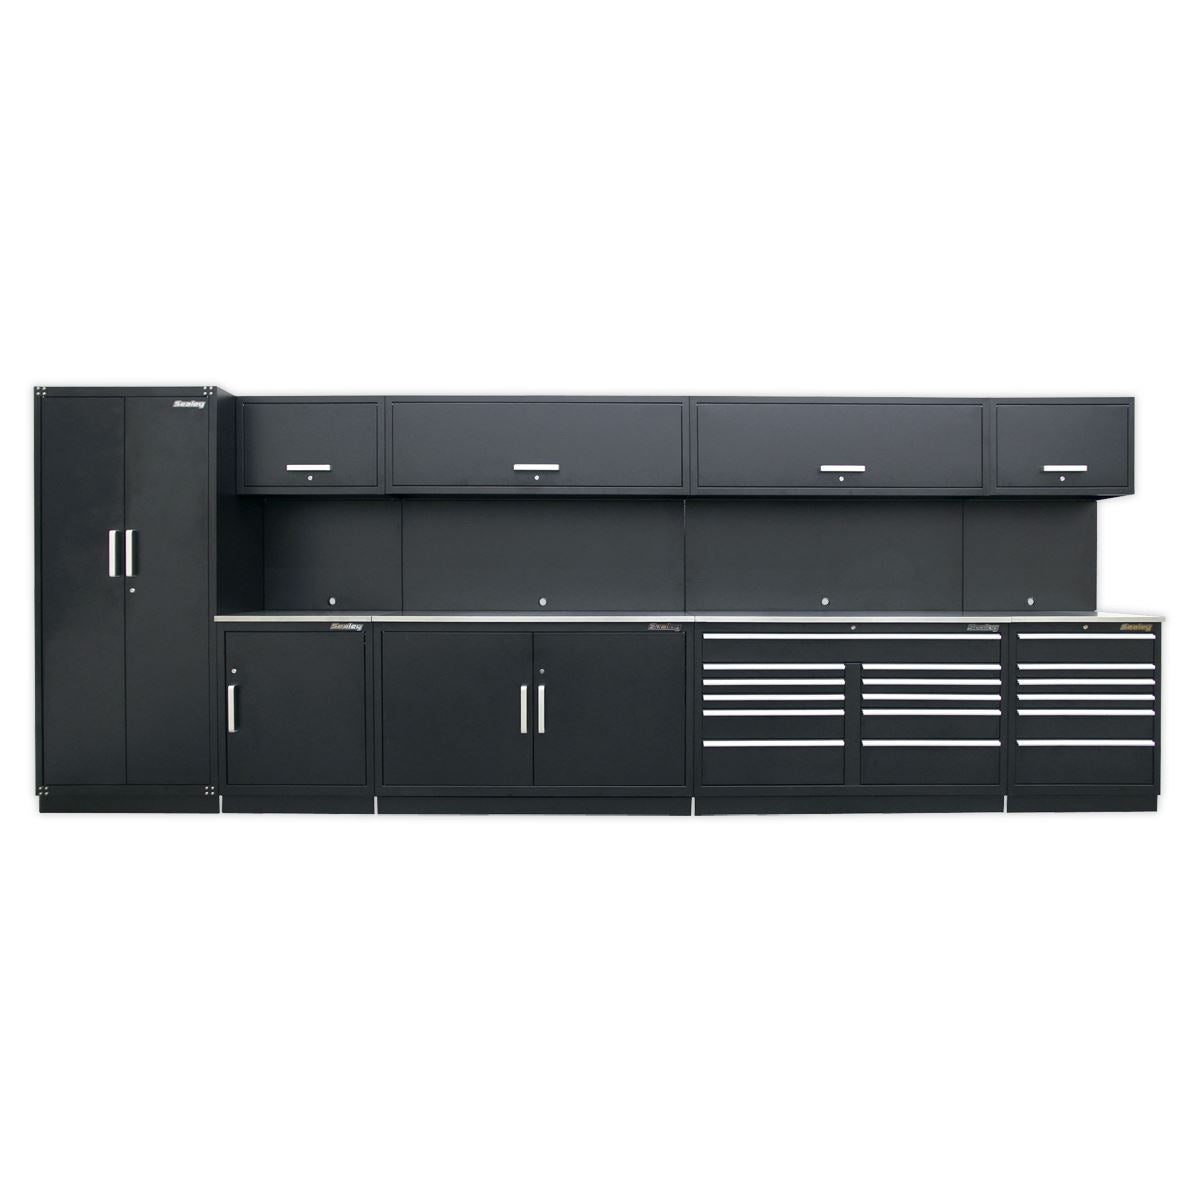 Sealey Premier Premier 5.6m Storage System - Stainless Worktop